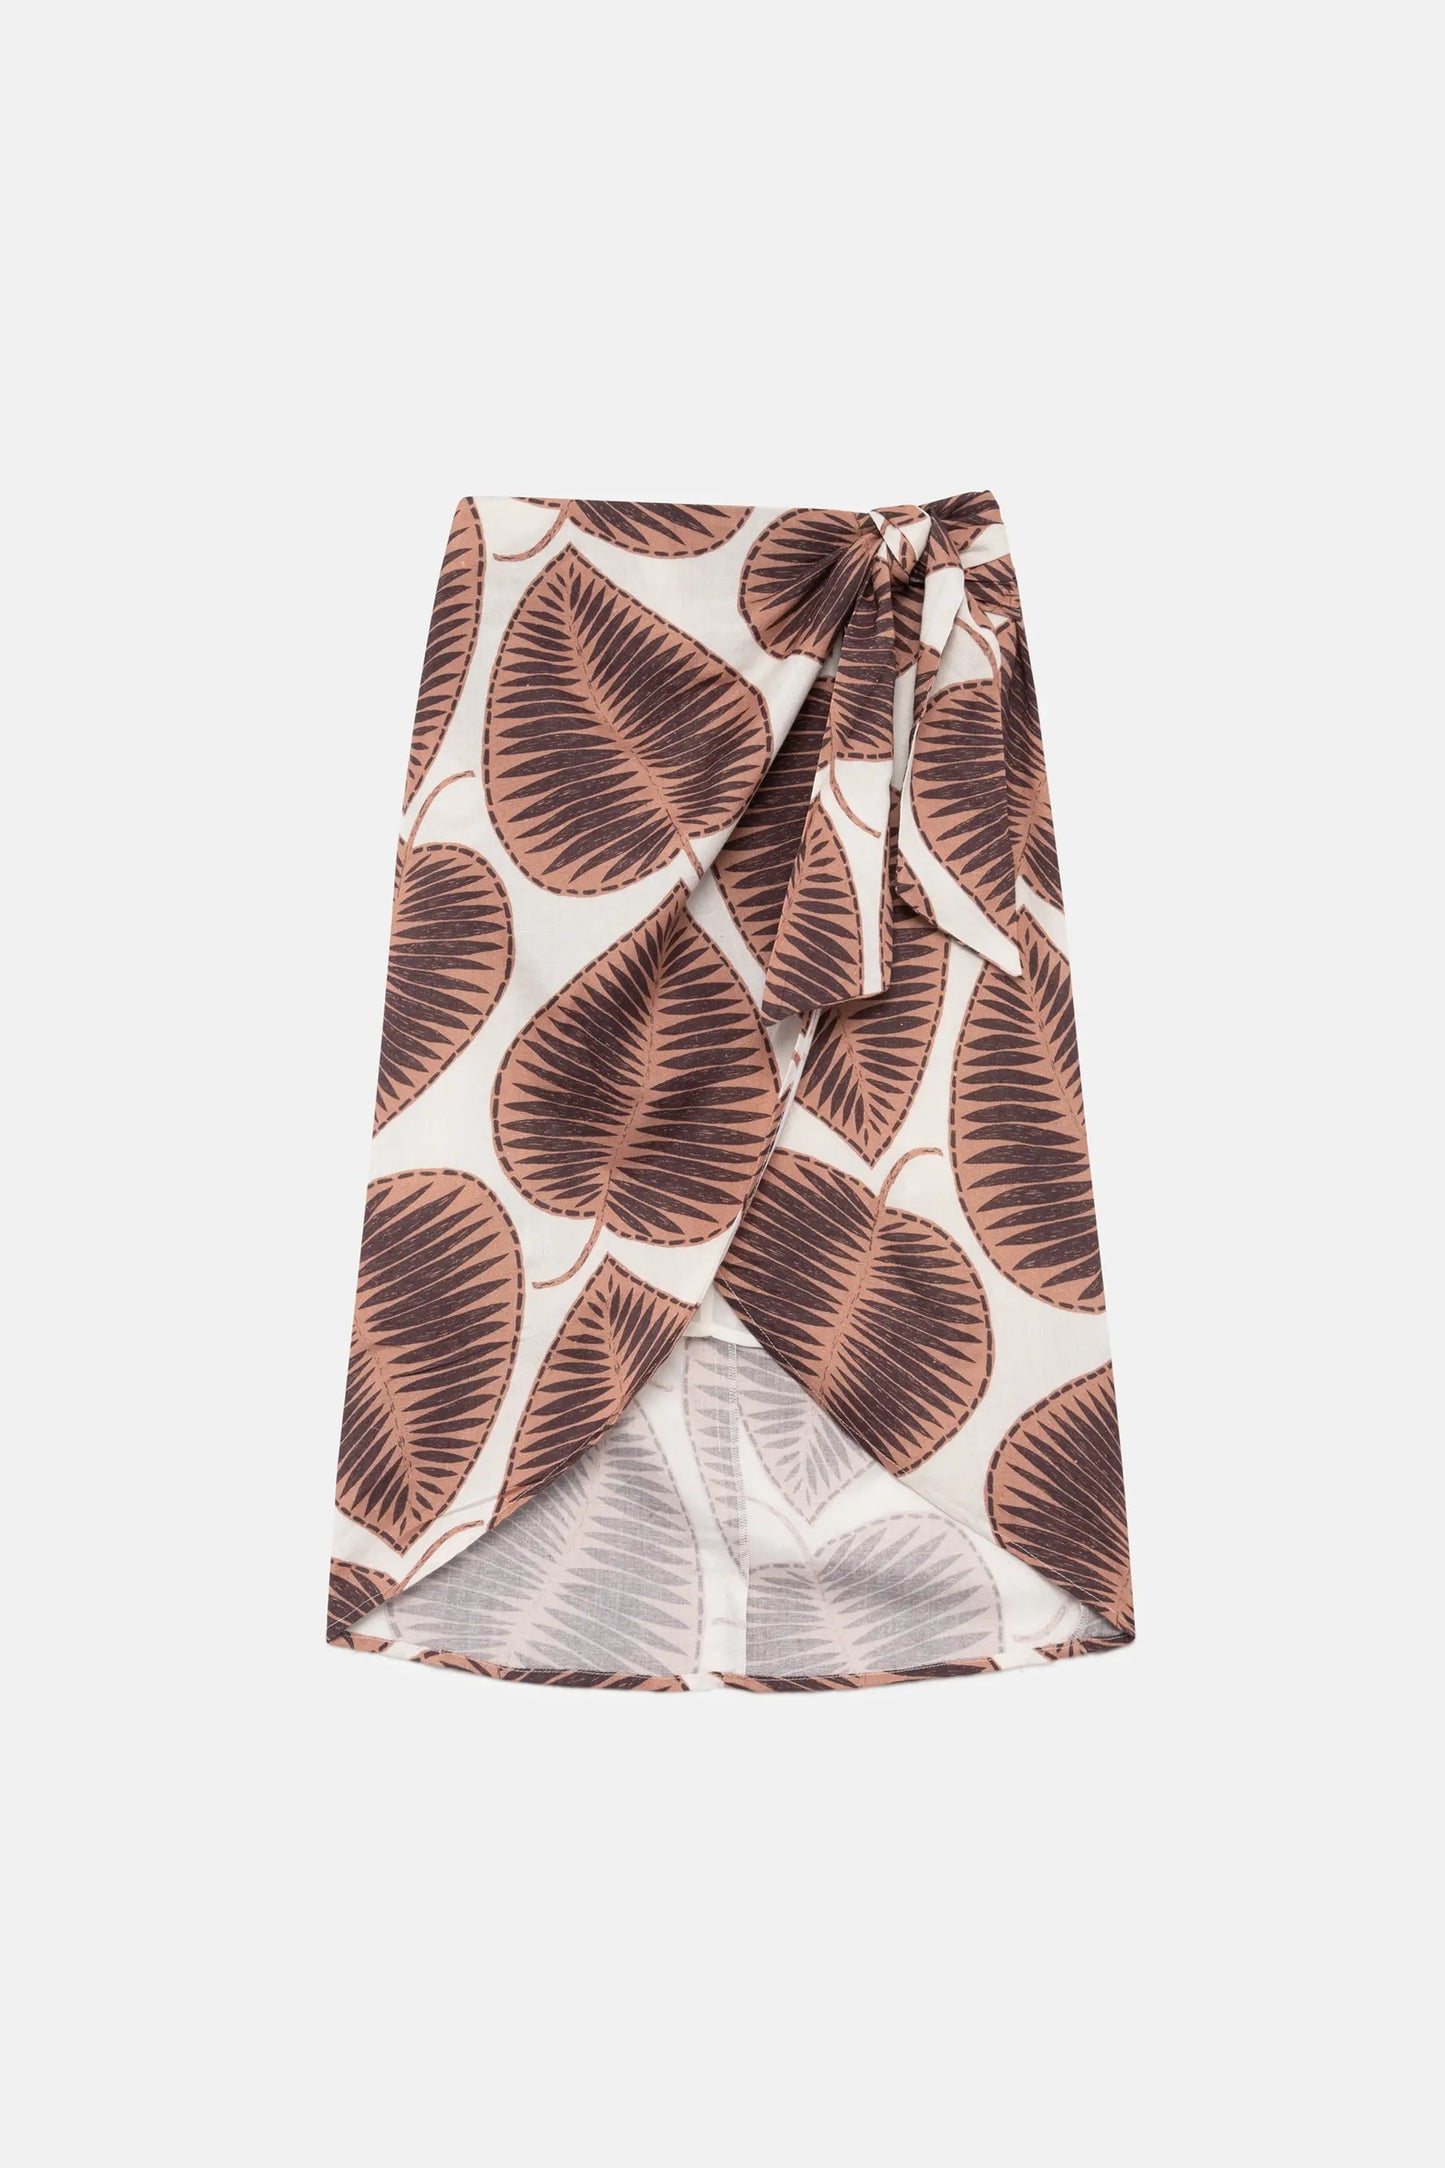 Calathea Machiato printed midi skirt